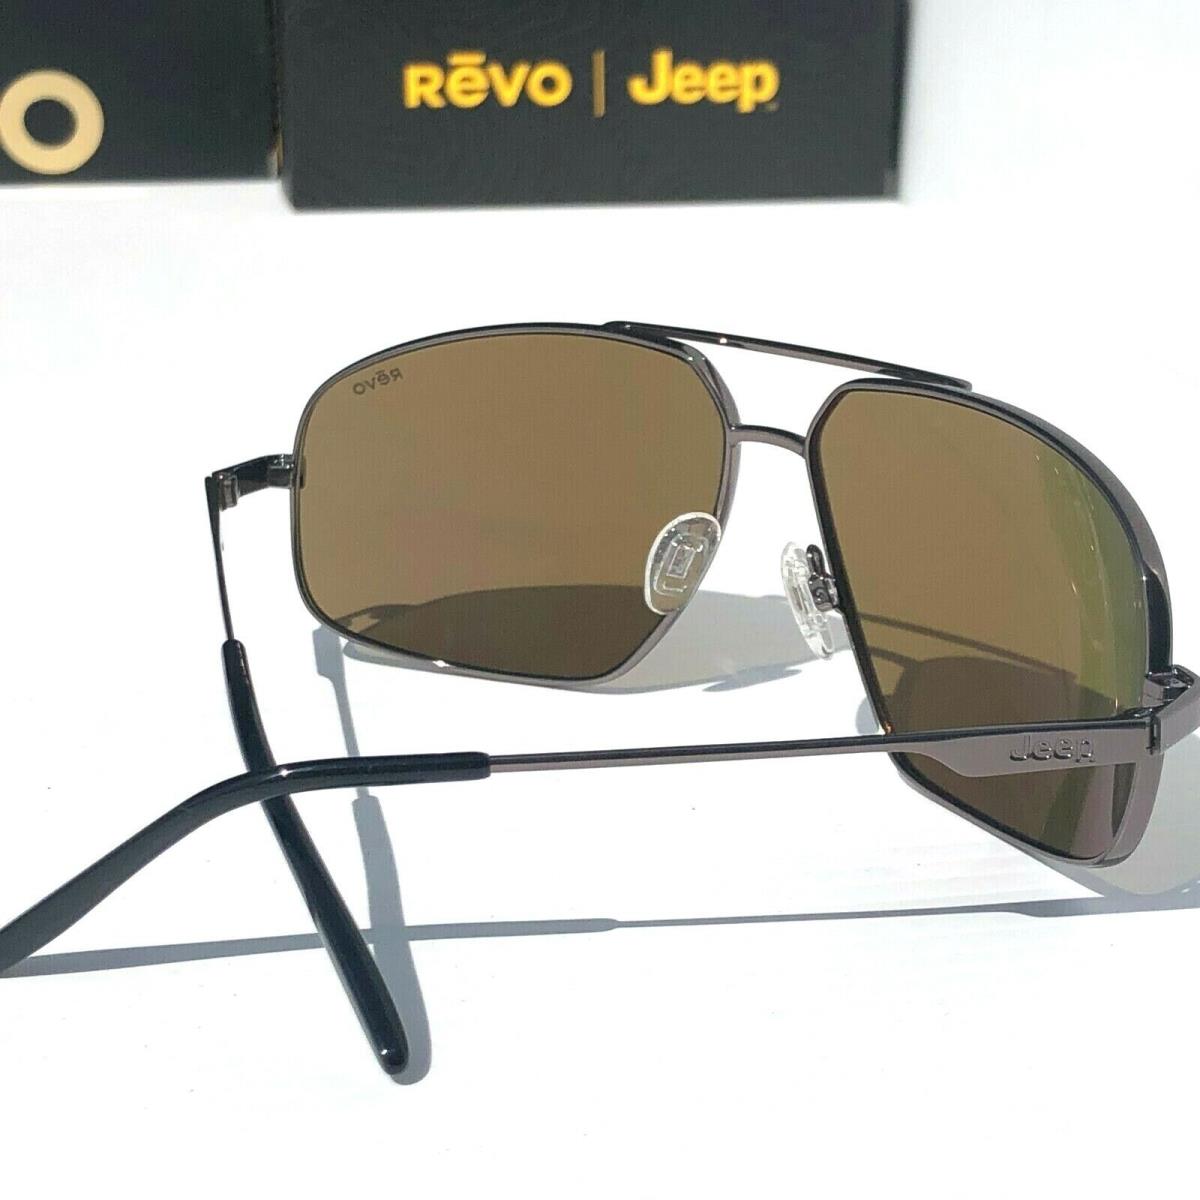 Revo sunglasses Jeep Metro - Brown Frame, Brown Lens, Brown Manufacturer